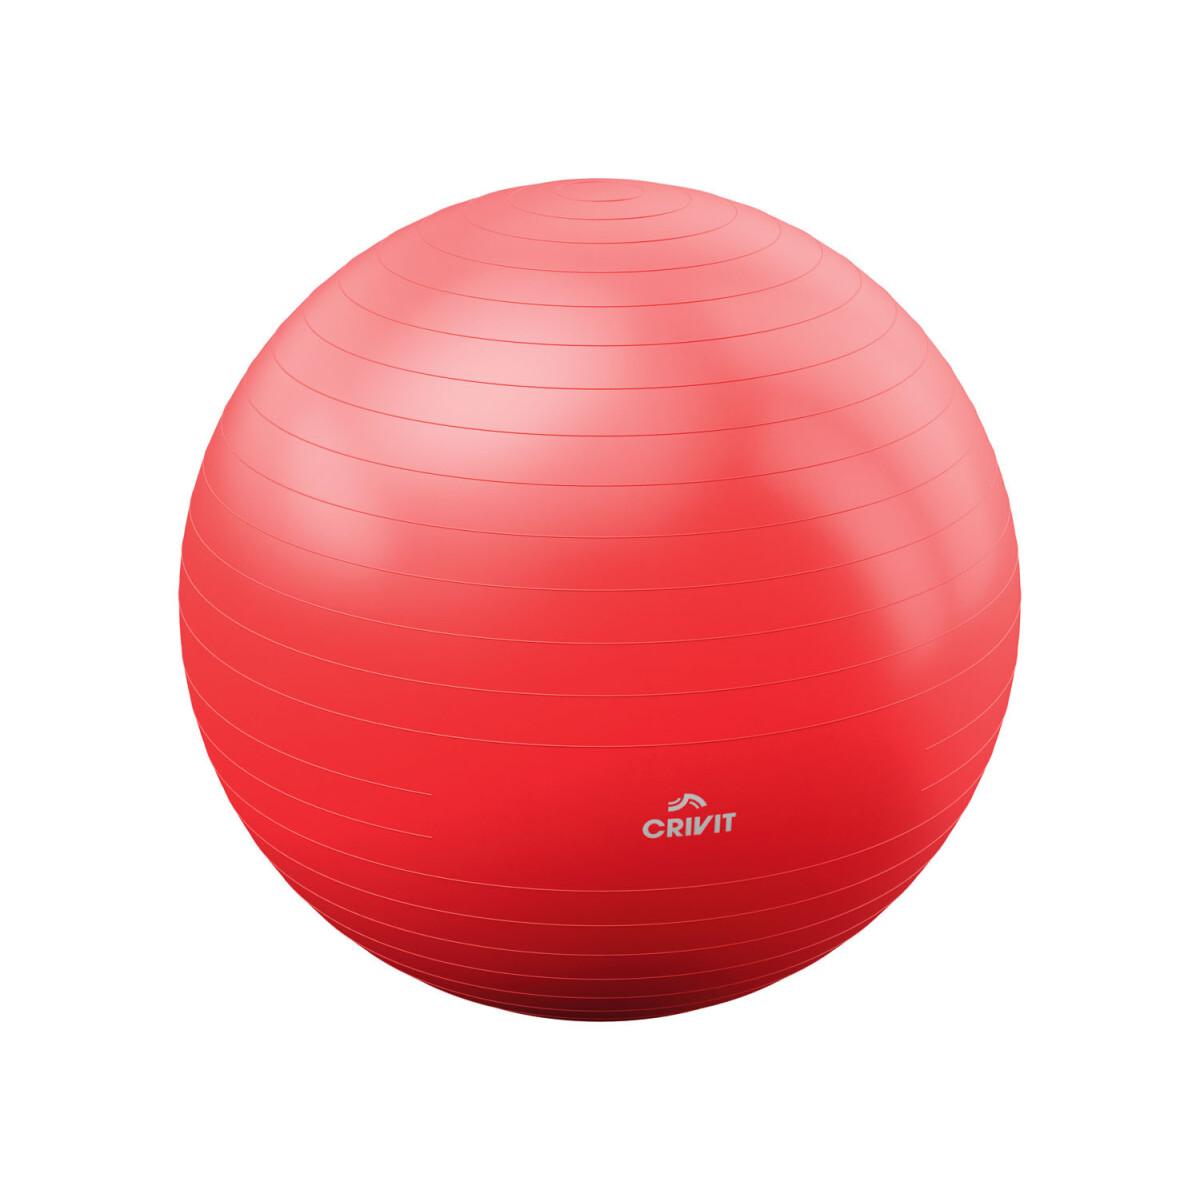 CRIVIT Soft Gymnastikball, Ø 65 cm - B-Ware, 8,99 €